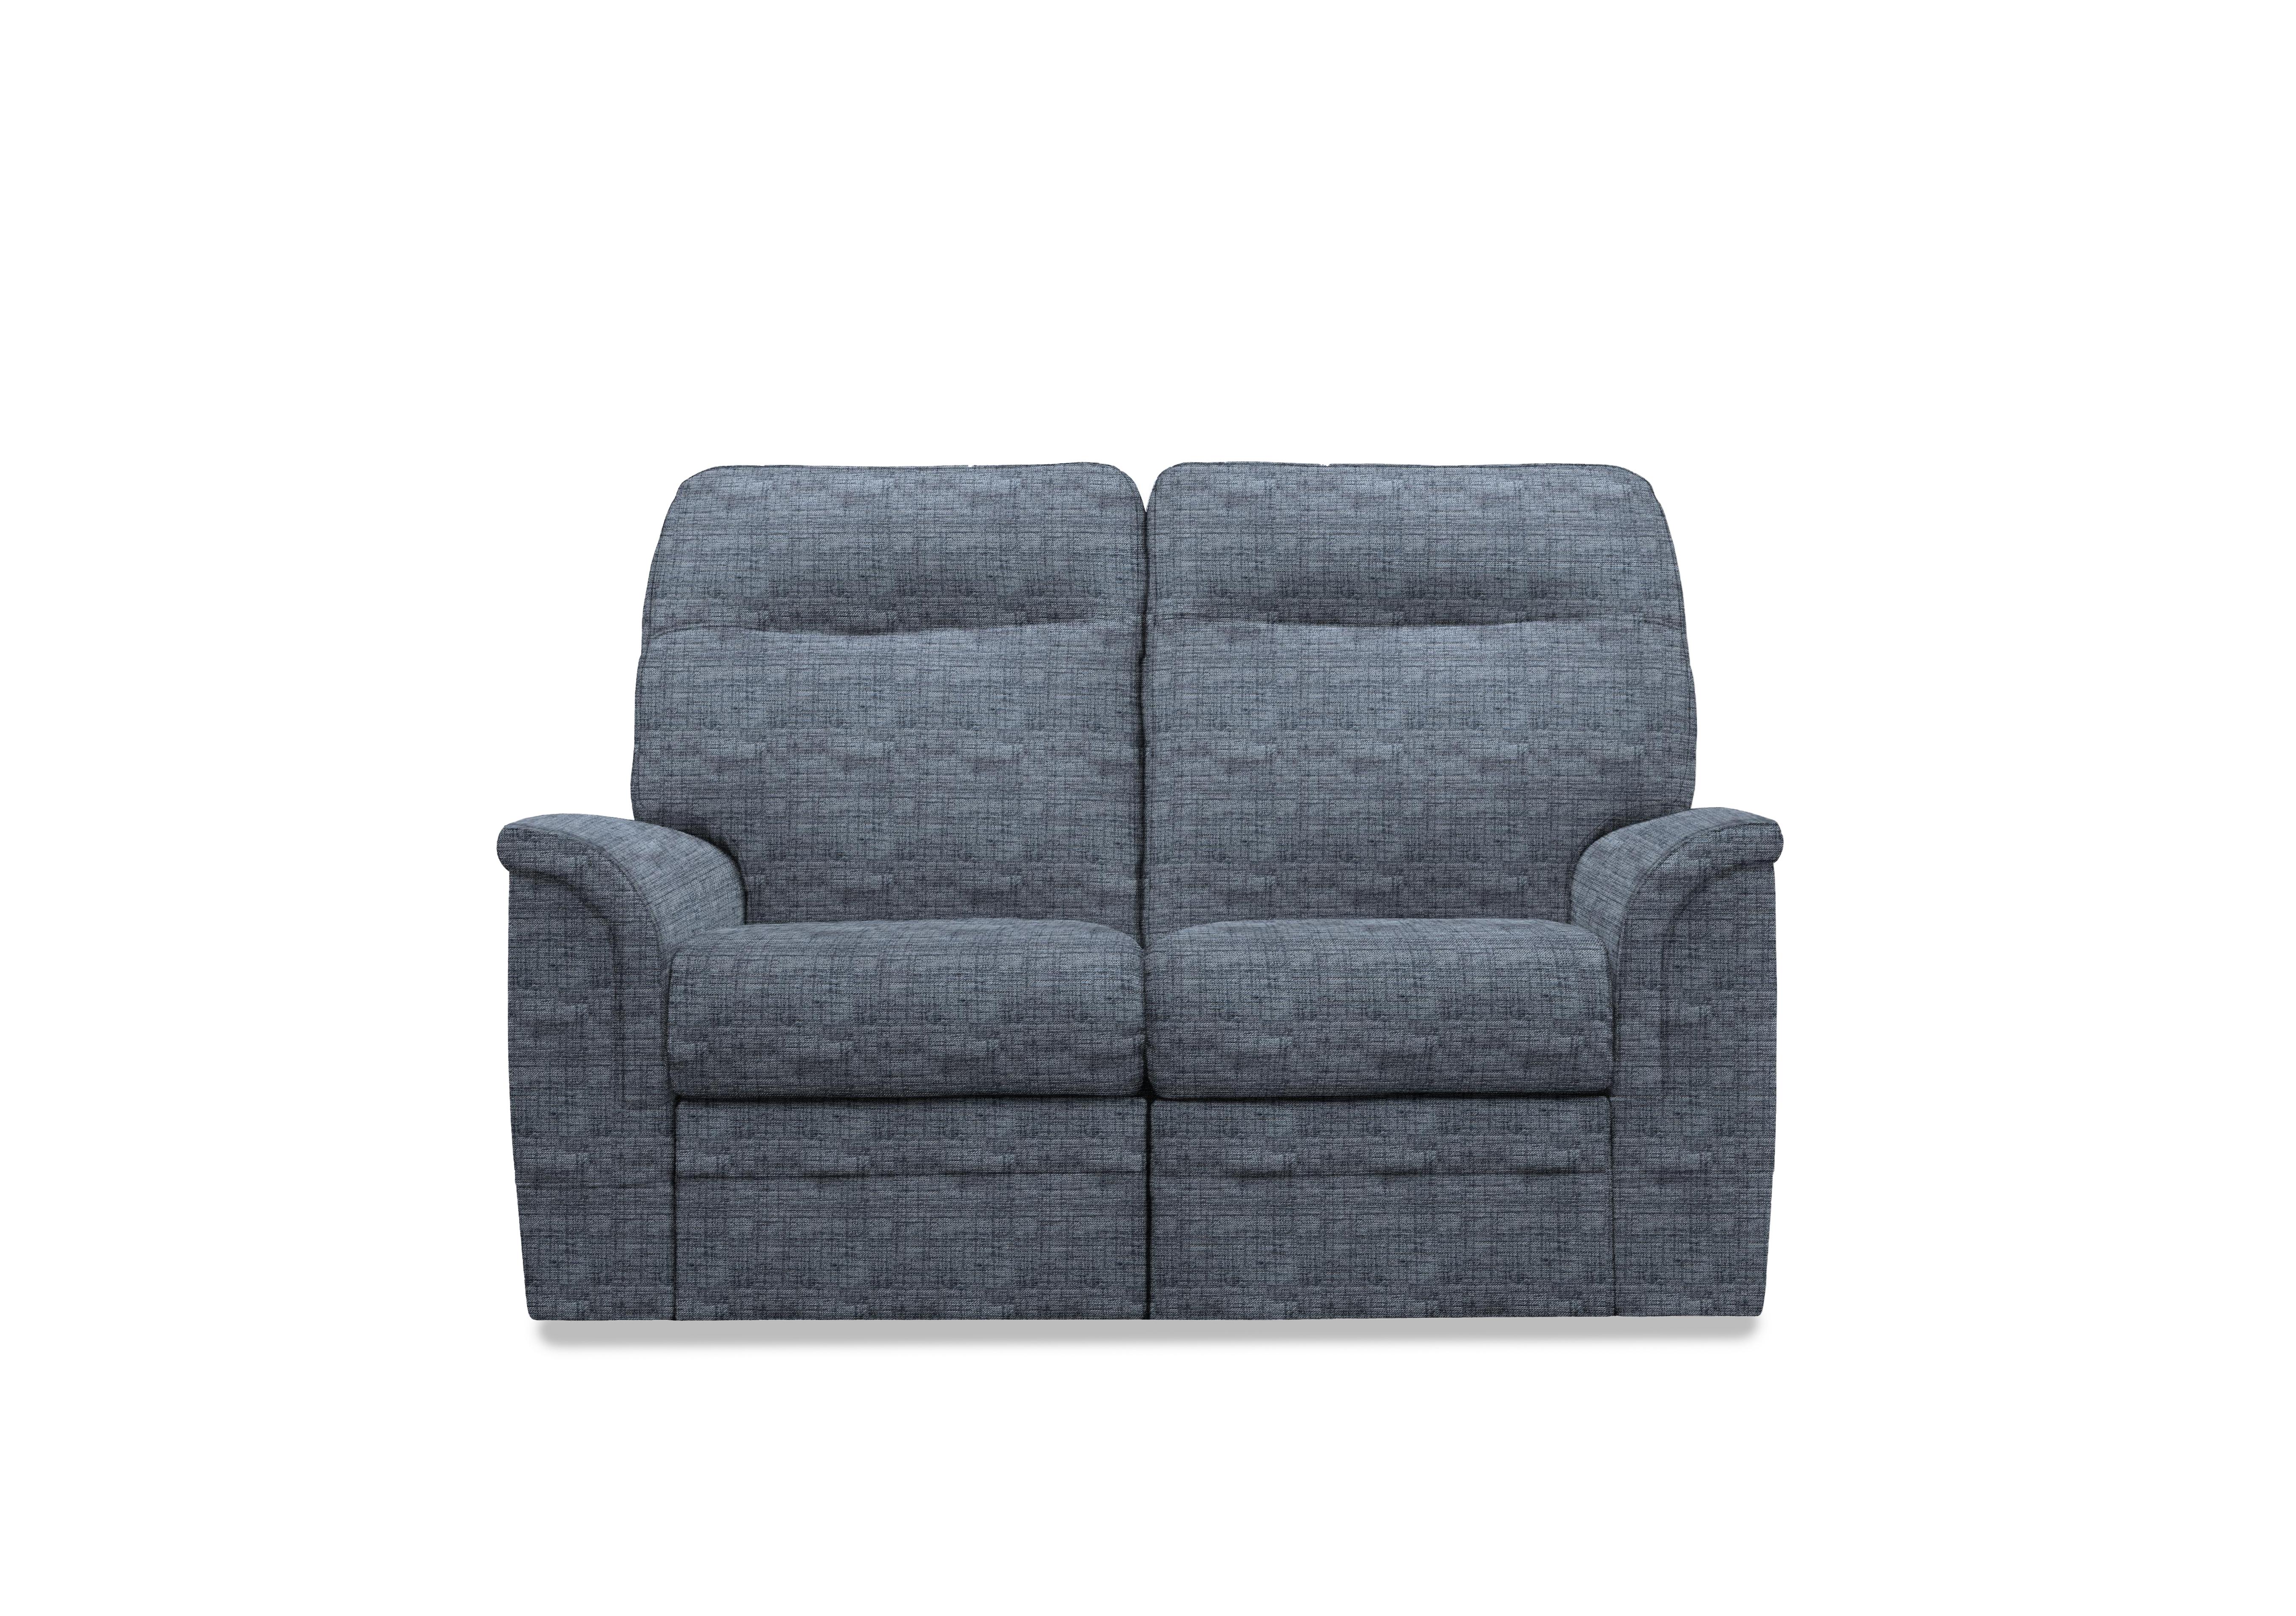 Hudson 23 Fabric 2 Seater Sofa in Dash Blue 001497-0080 on Furniture Village